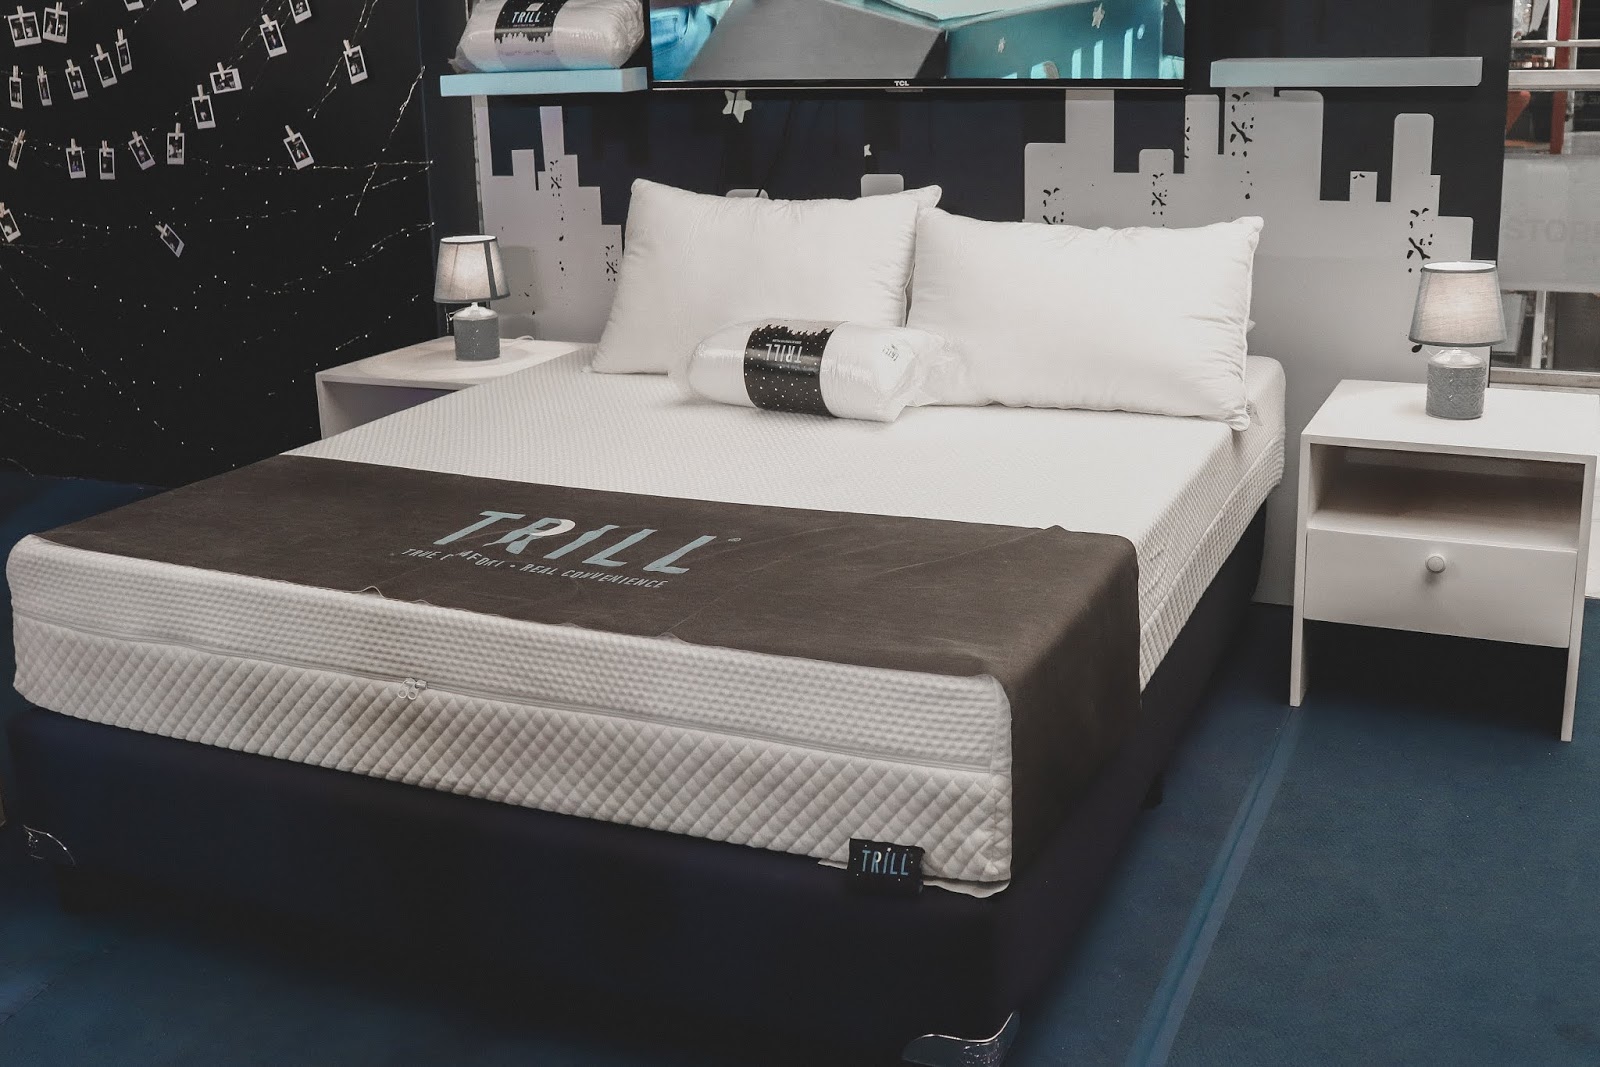 uratex trill air mattress review